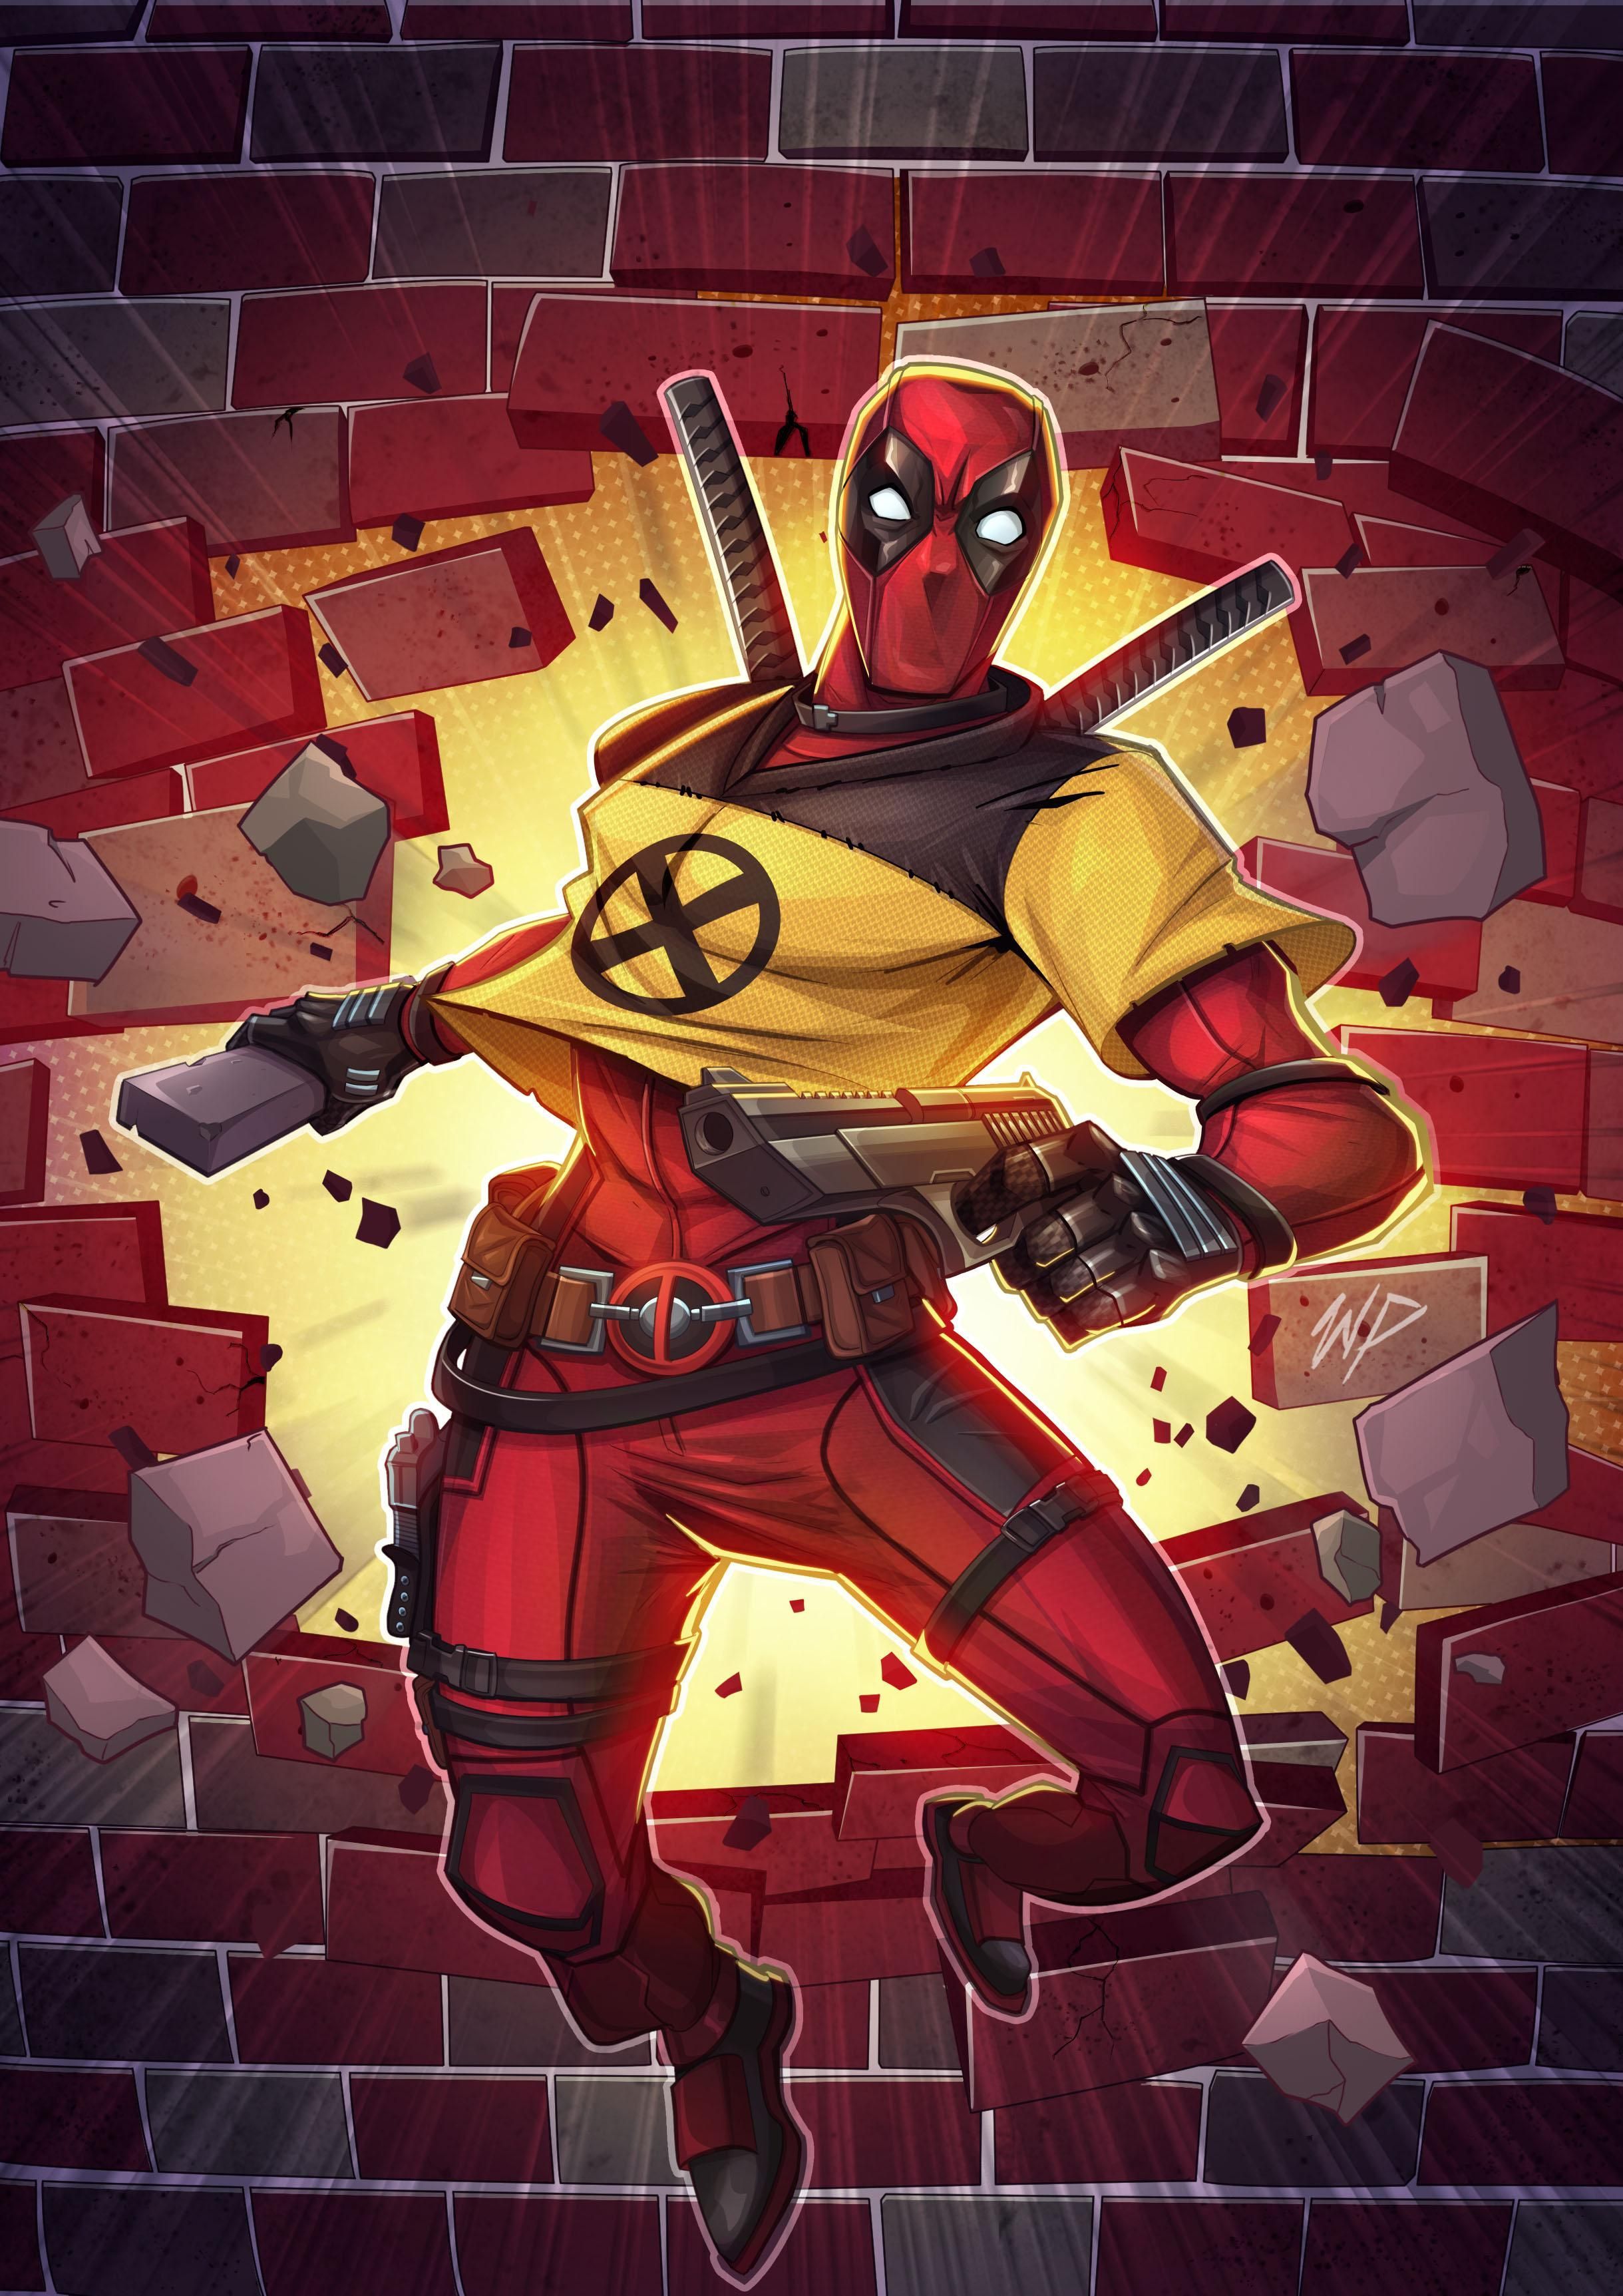 Xmen trainee. Deadpool wallpaper, Deadpool comic, Deadpool artwork